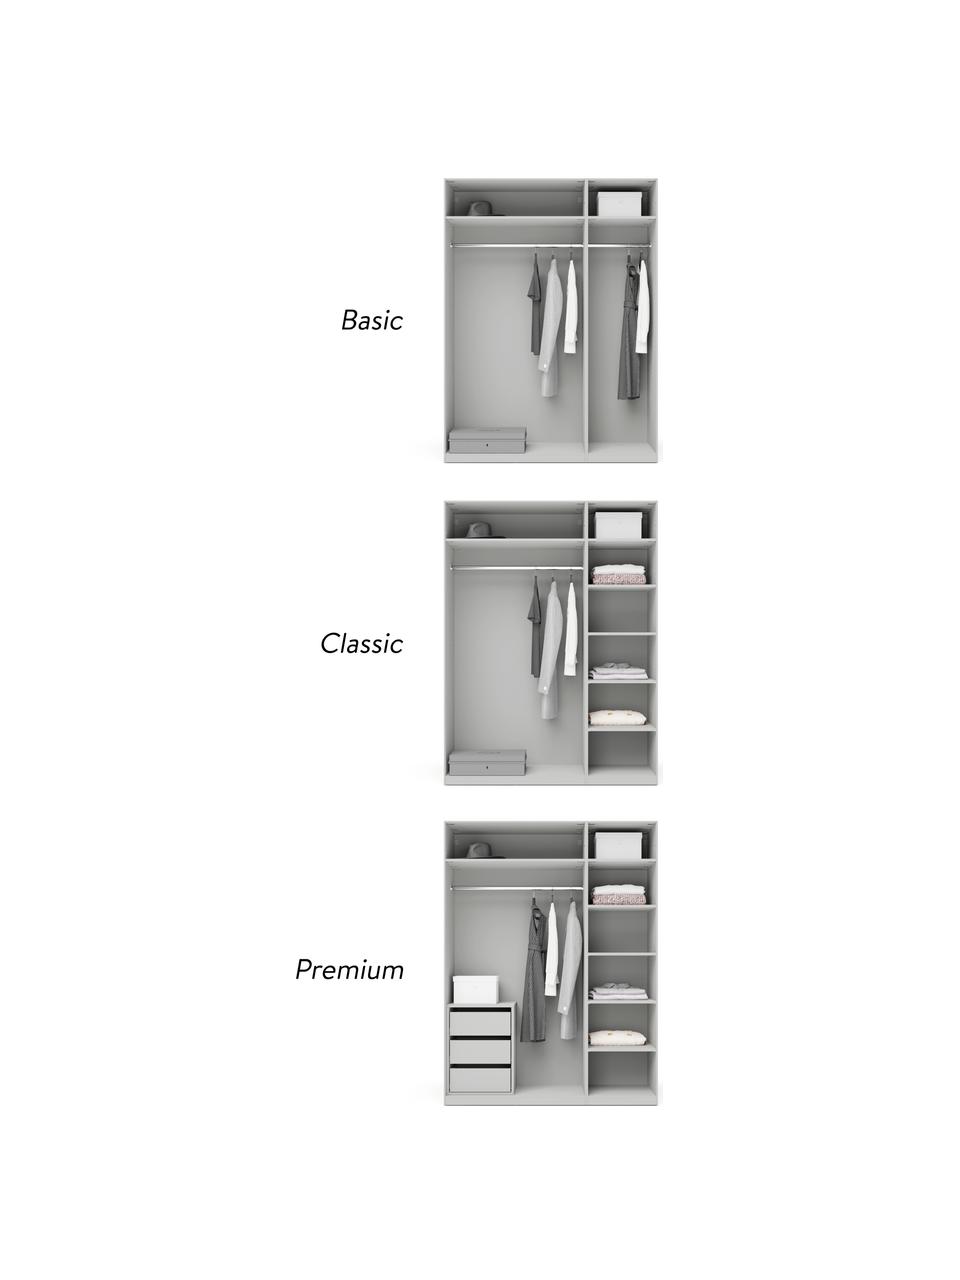 Modulární skříň s otočnými dveřmi Charlotte, šířka 150 cm, více variant, Šedá, Interiér Basic, Š 150 x V 200 cm